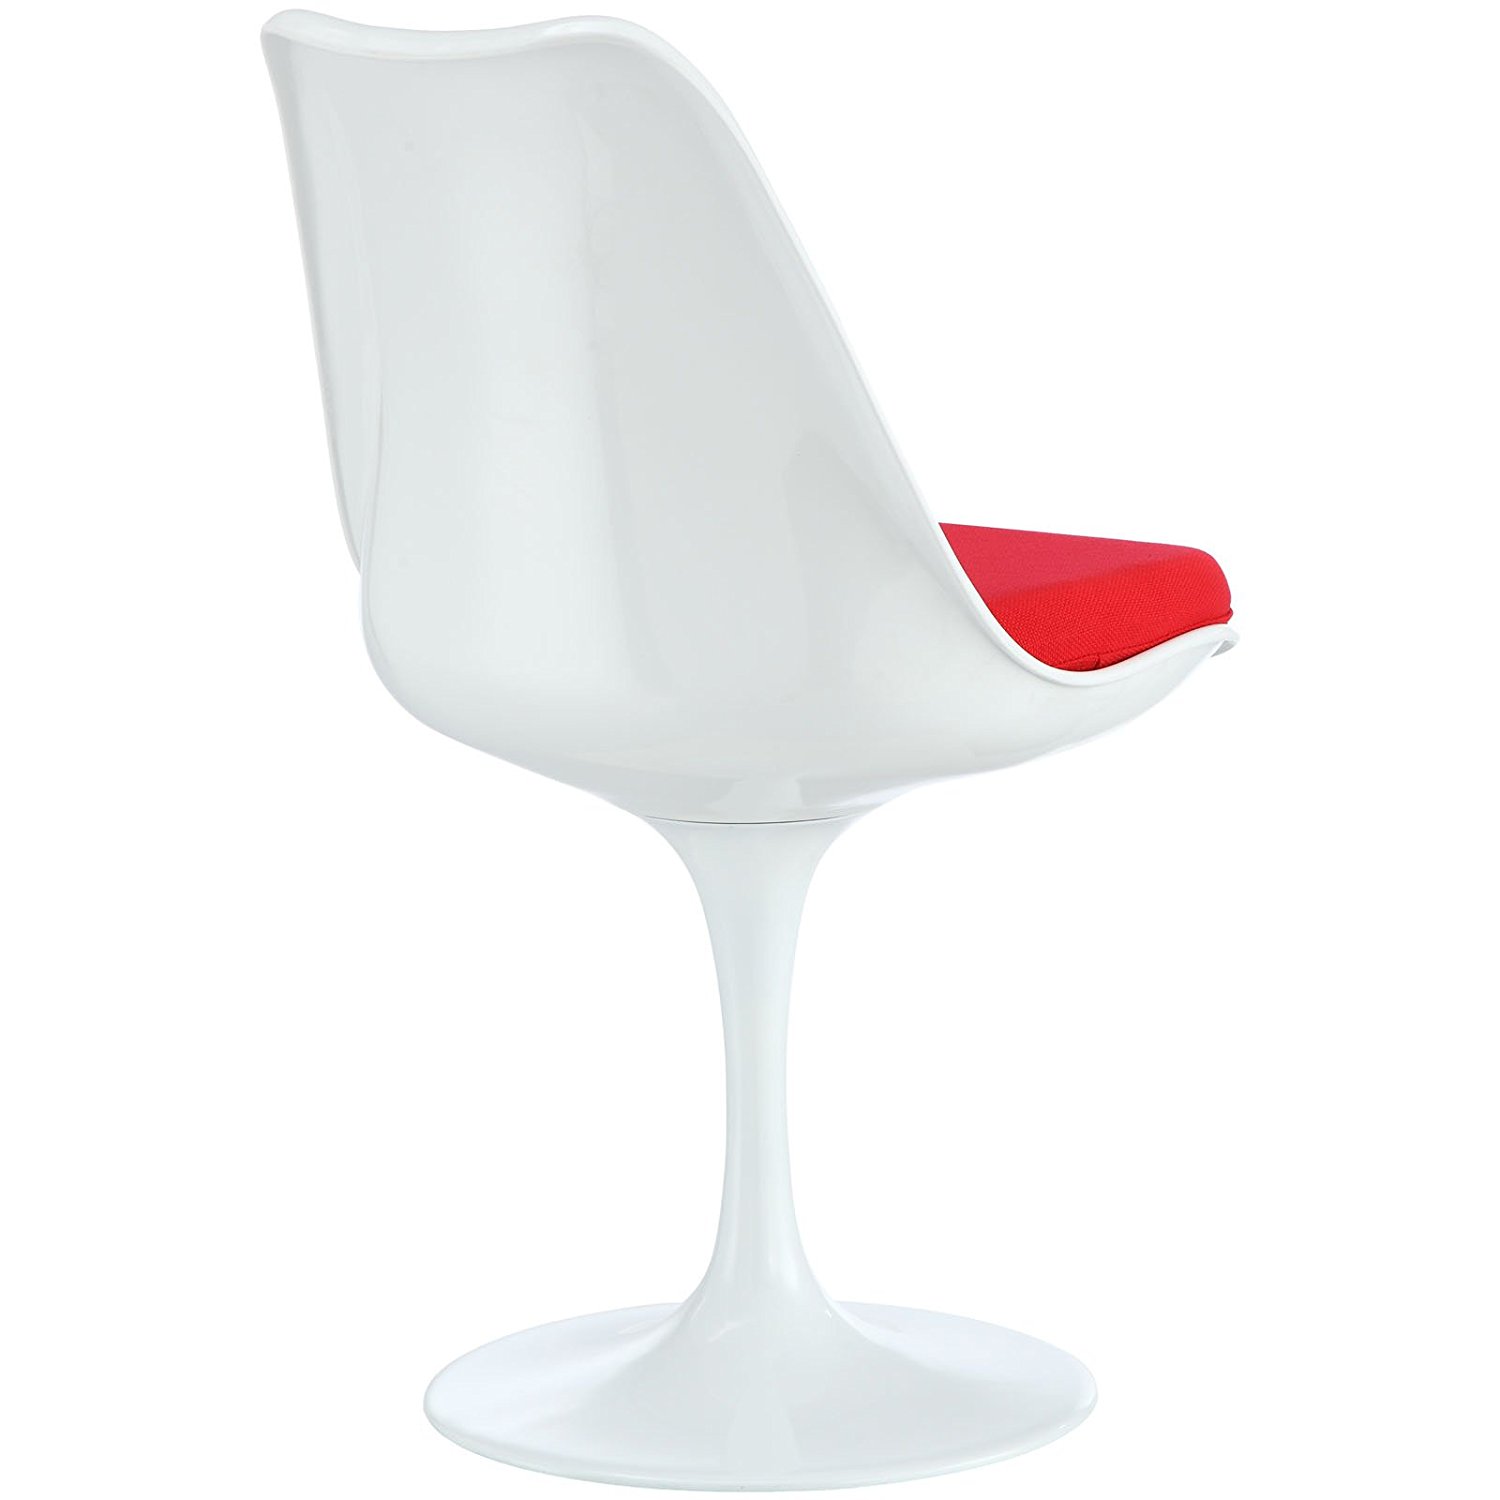 Стул Eero Saarinen Tulip Chair, красная подушка